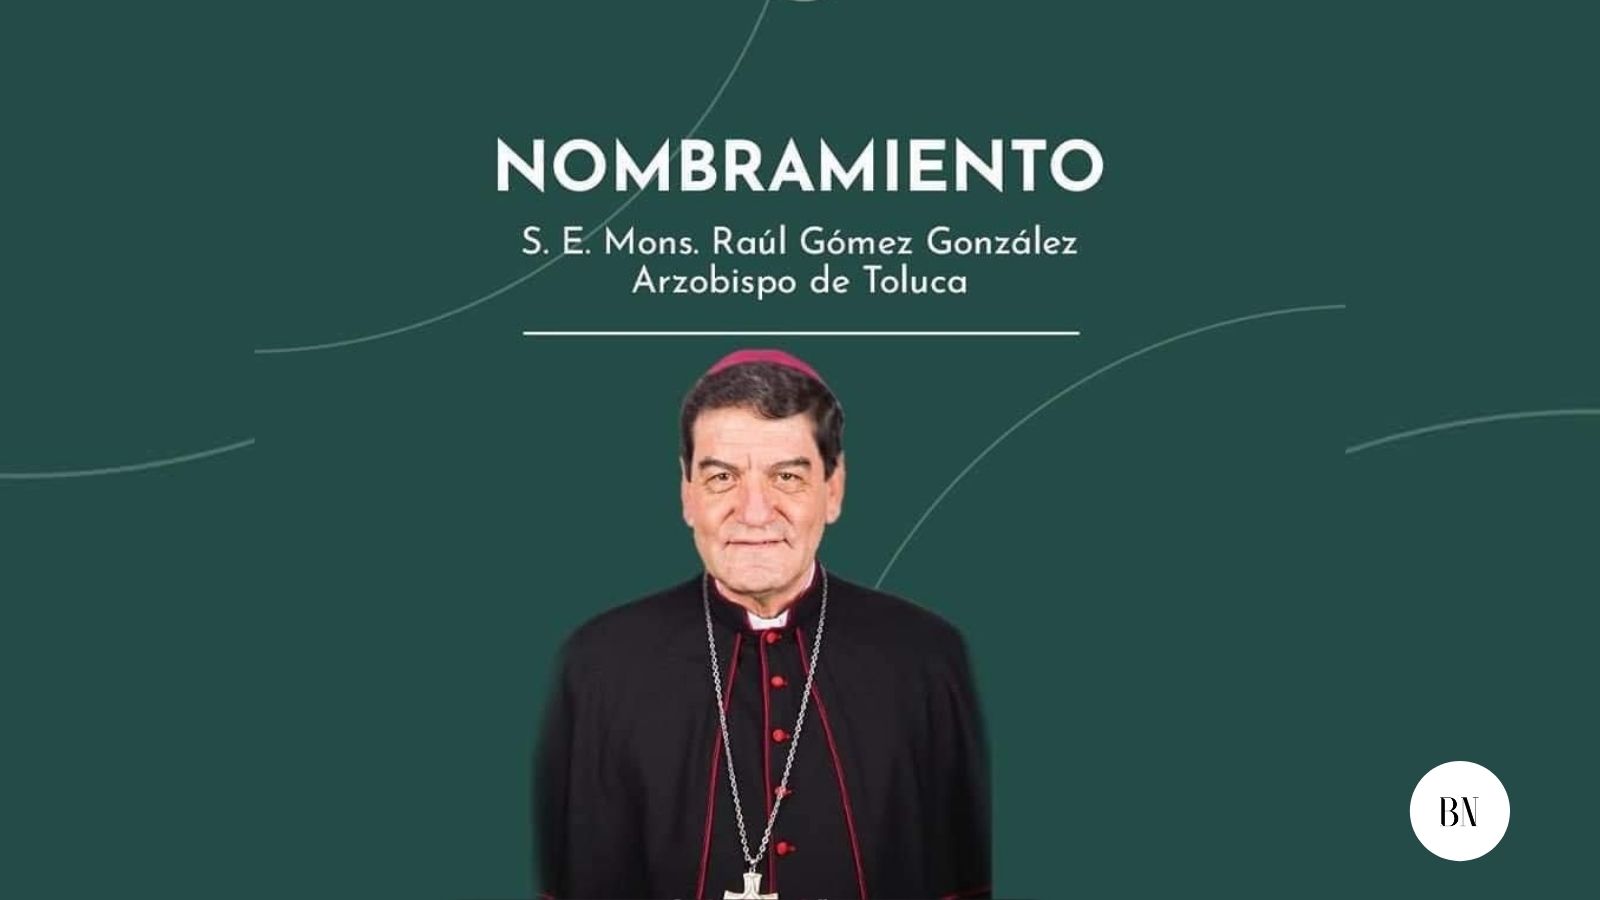 Primer Obispo de la Diócesis de Tenancingo fue nombrado Arzobispo